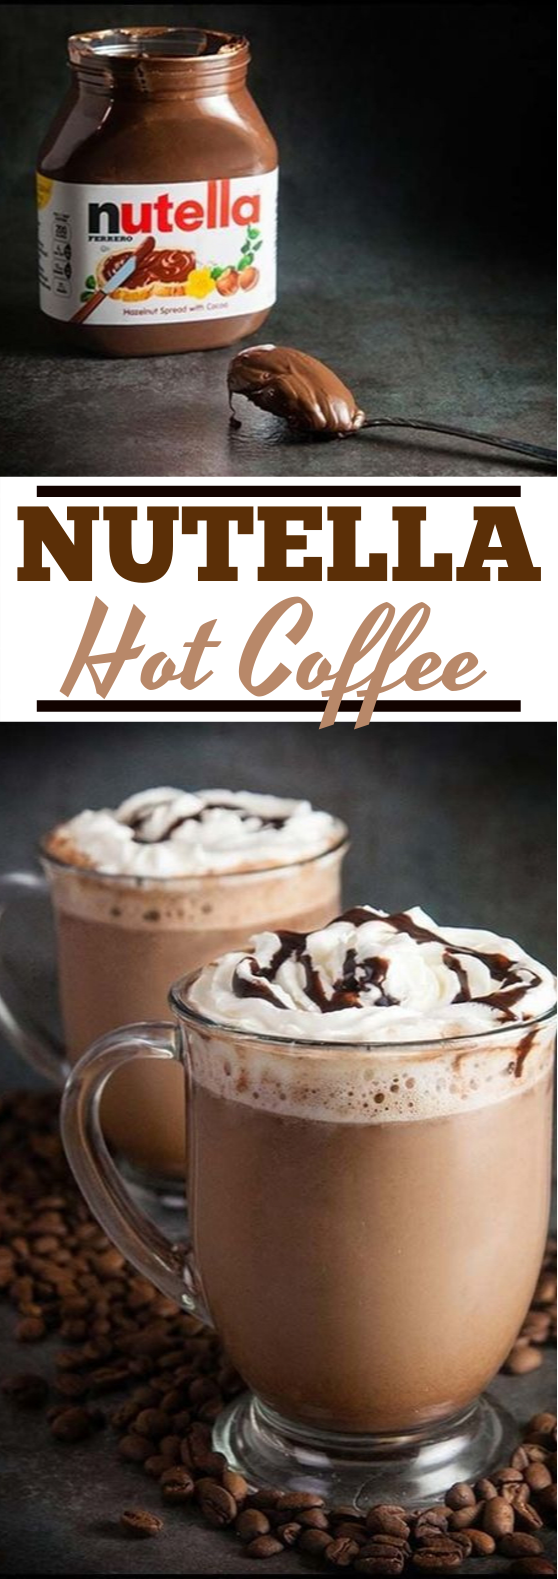 Nutella Hot Coffee #drinks #coffee